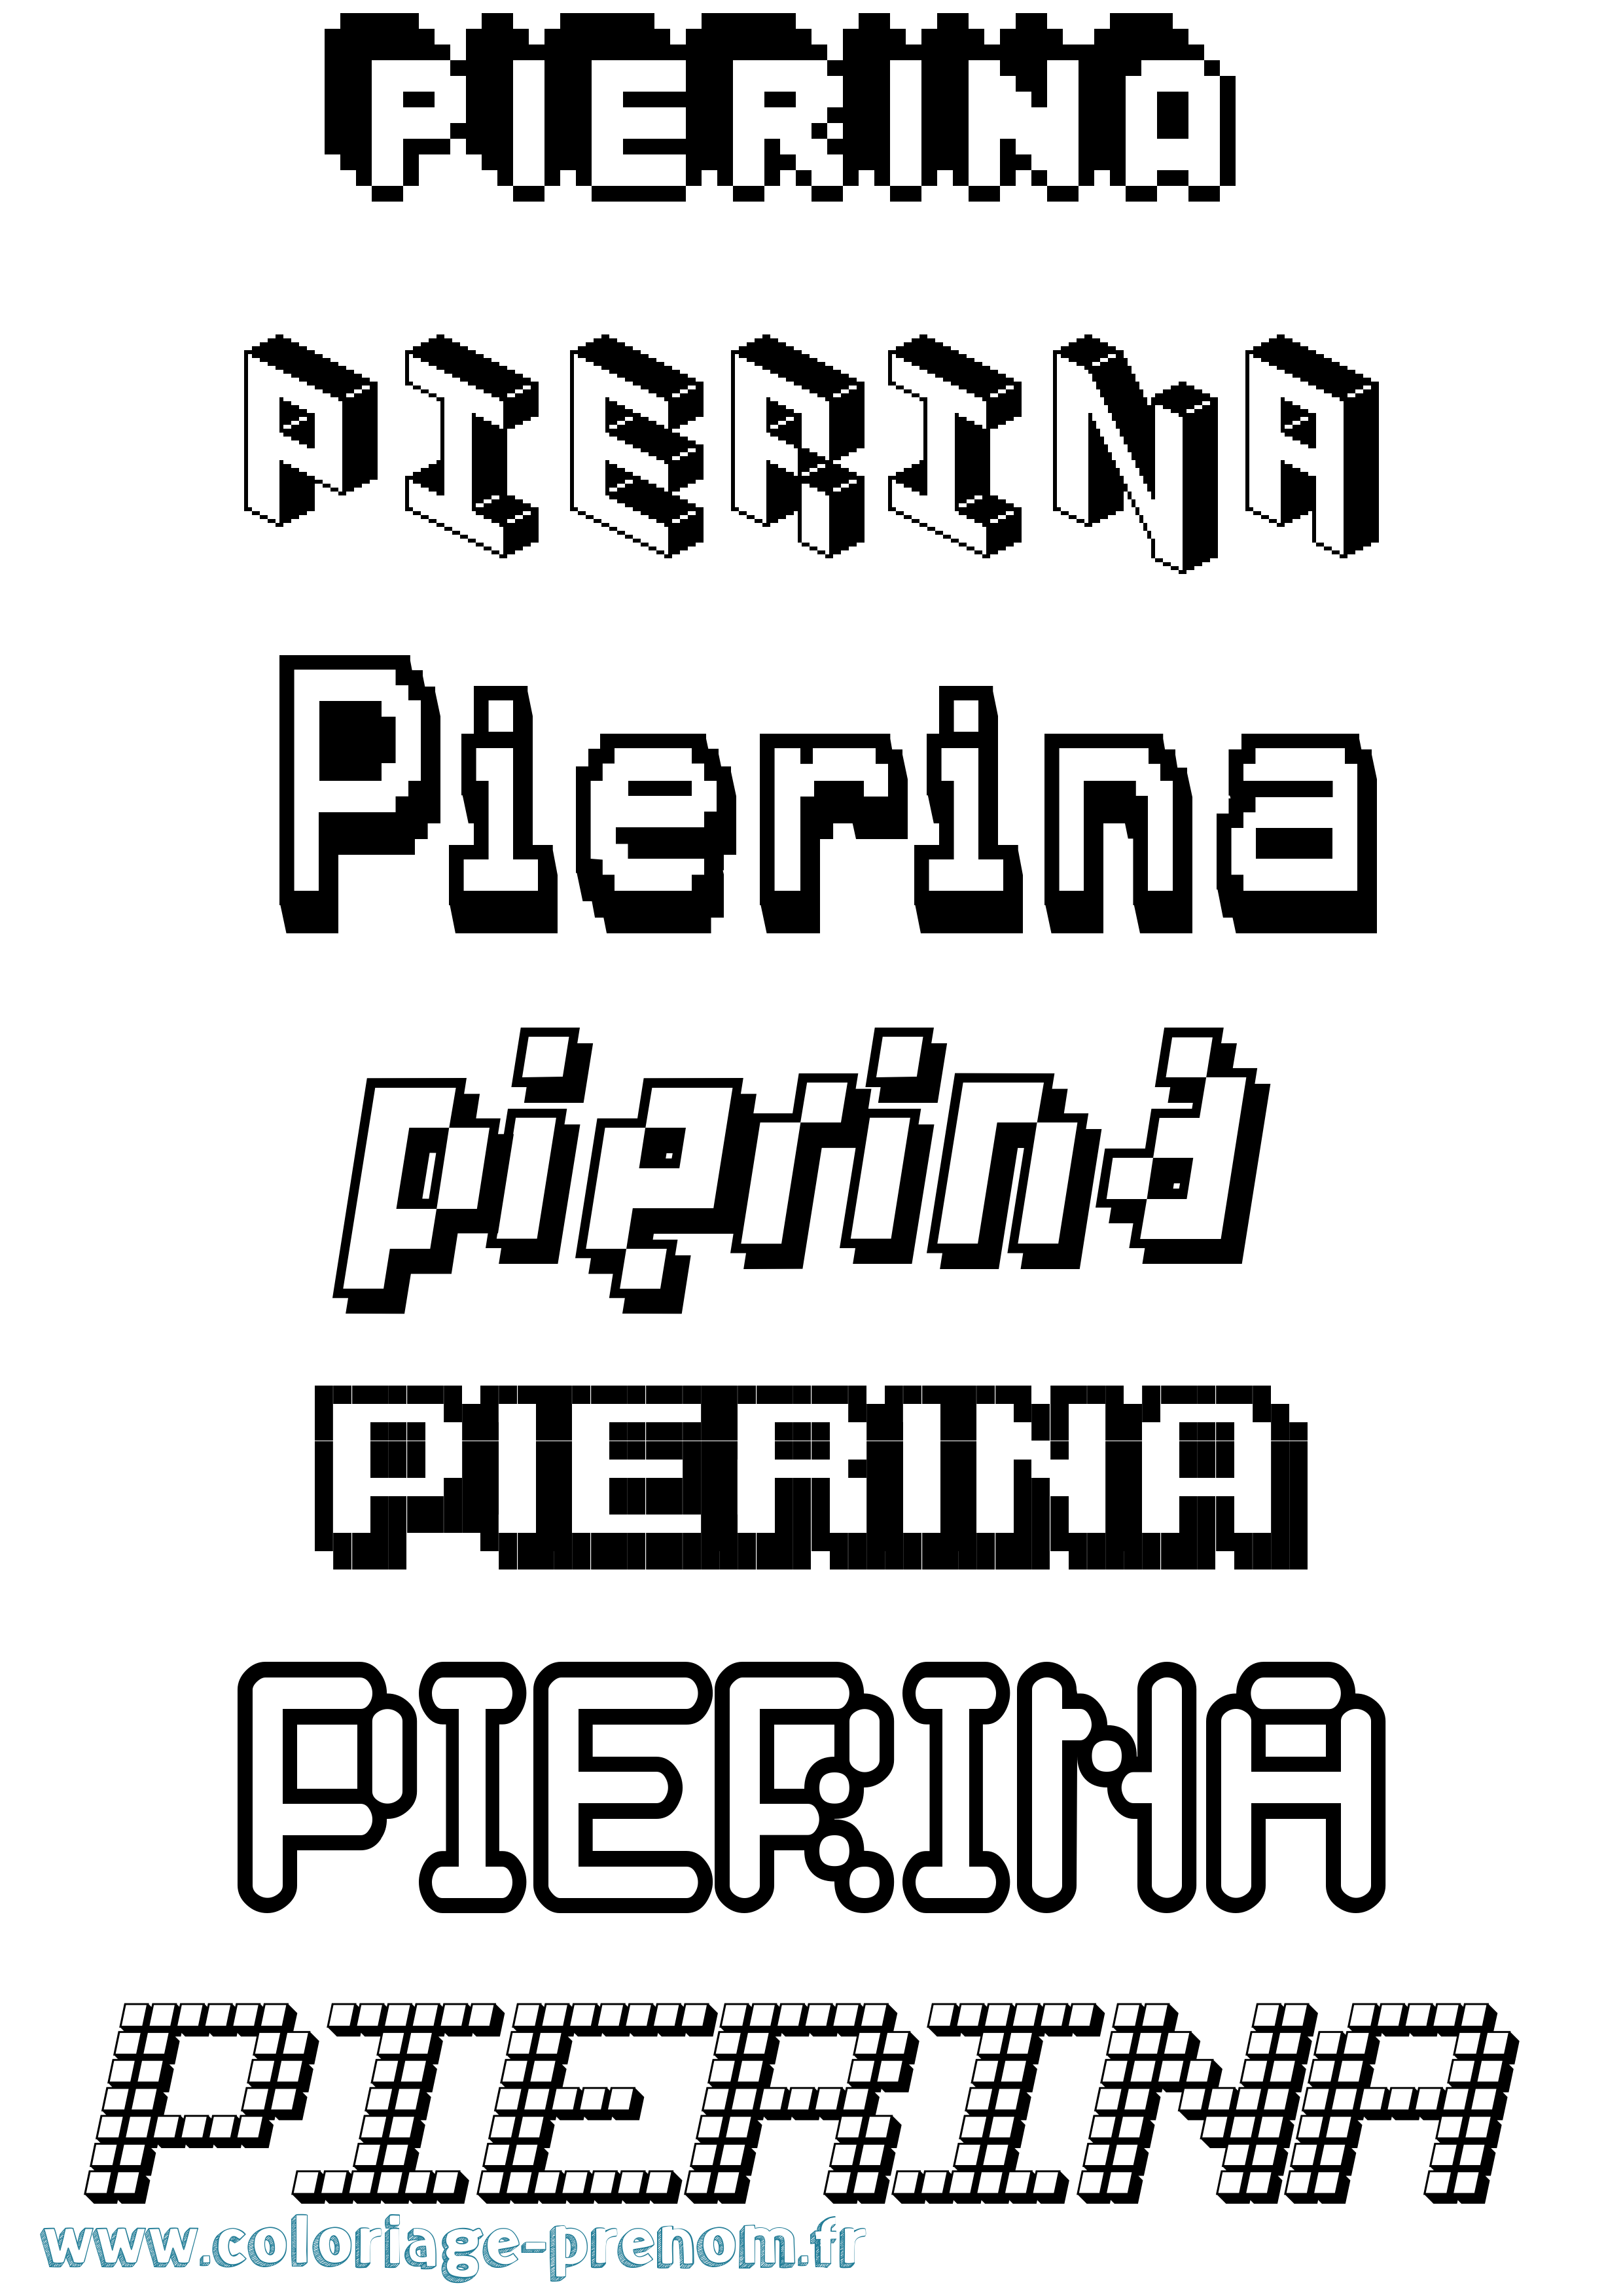 Coloriage prénom Pierina Pixel